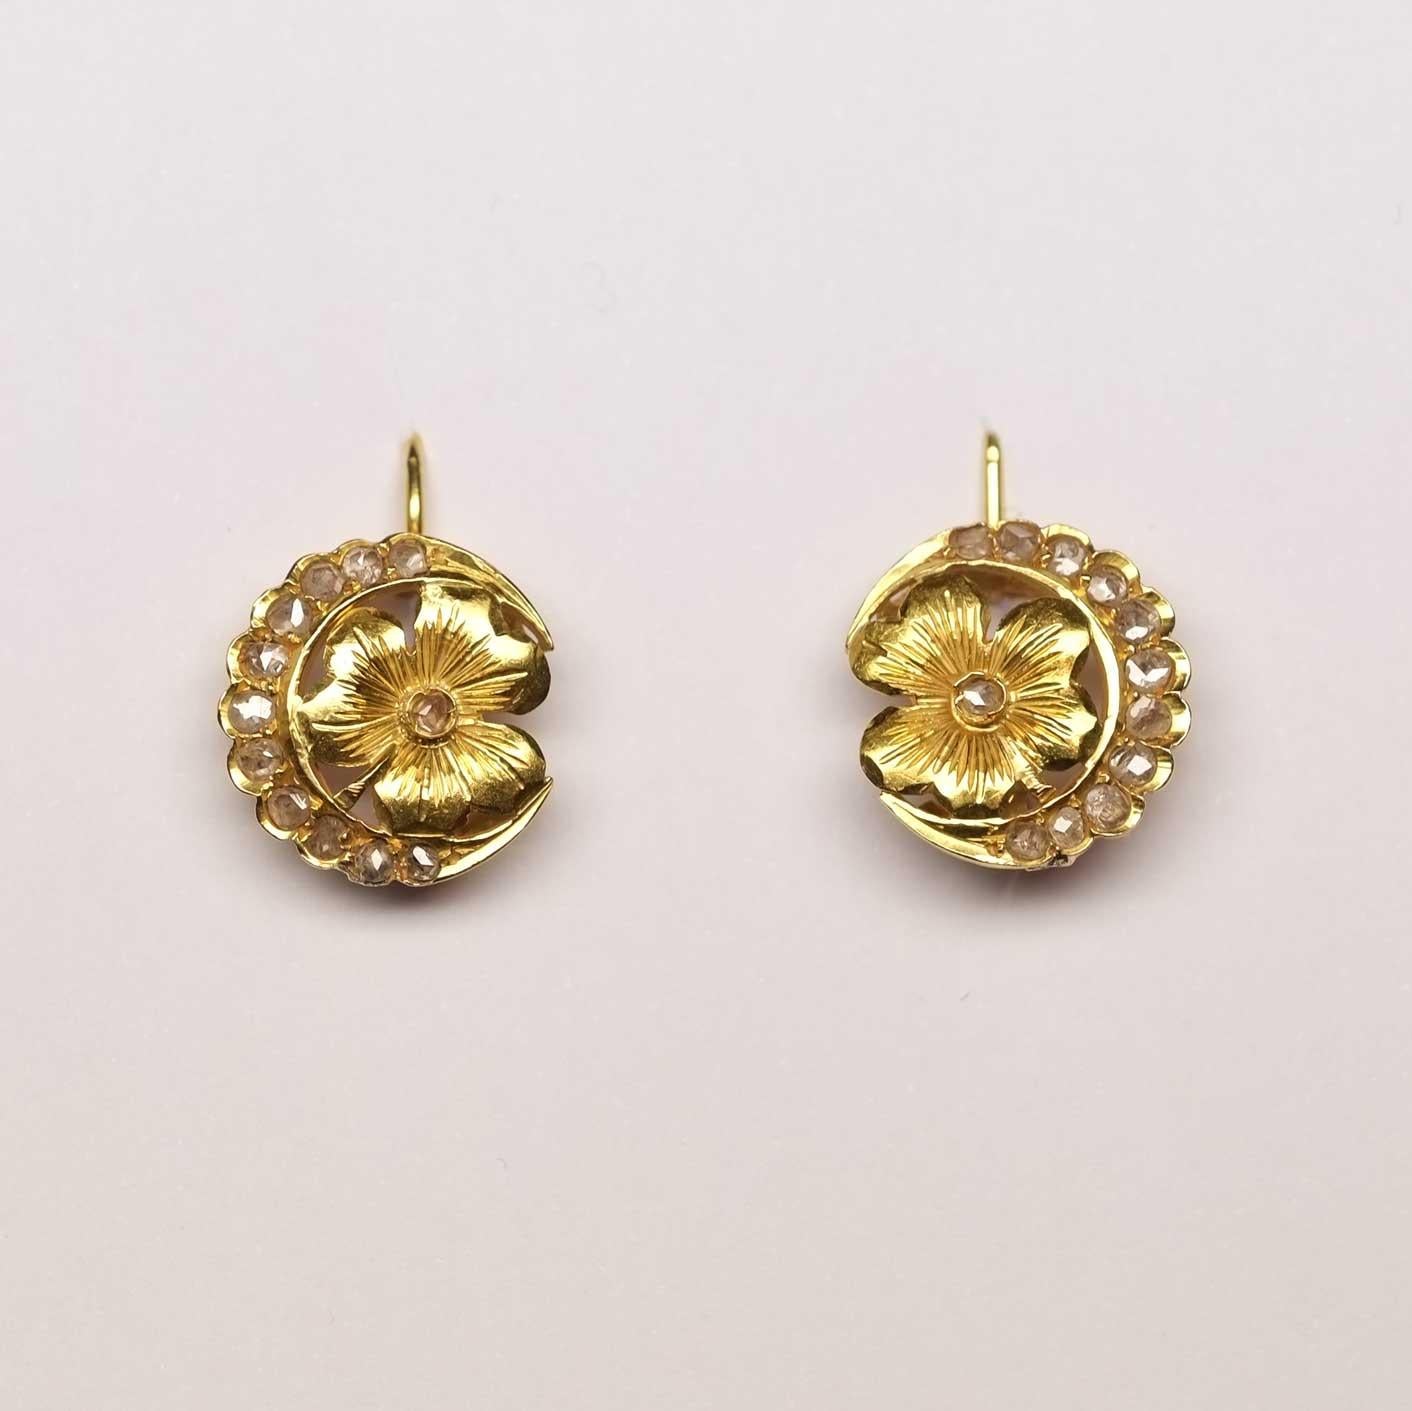 Floral design Art Nouveau earrings set in gold with rose cut diamonds. Lever back fastening.

Highlights
- Gold 18ct
- Rose cut diamonds
- Art Nouveau period 1900s c.a.

Measurements
- Diameter 1.4cm
- Weight 4.5gr